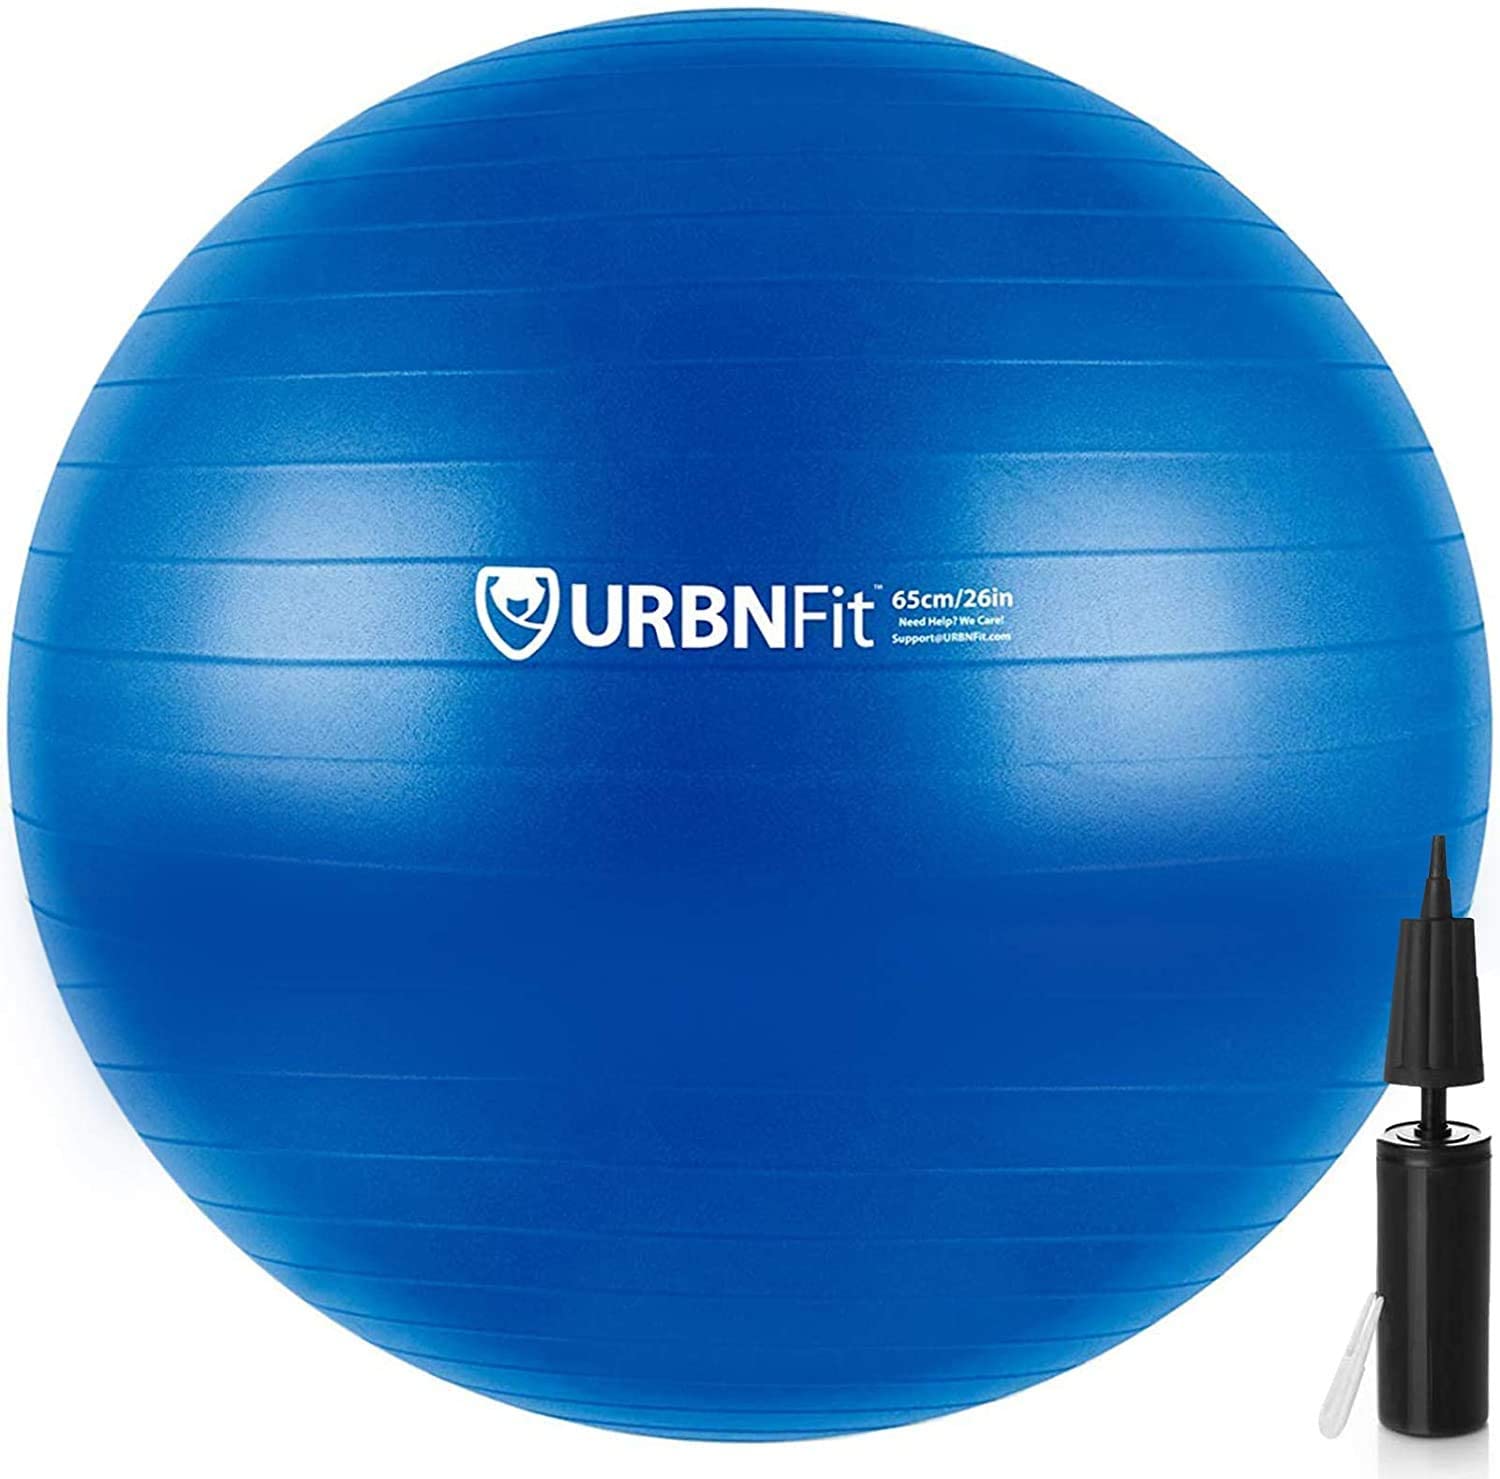 URBN Fit Ball